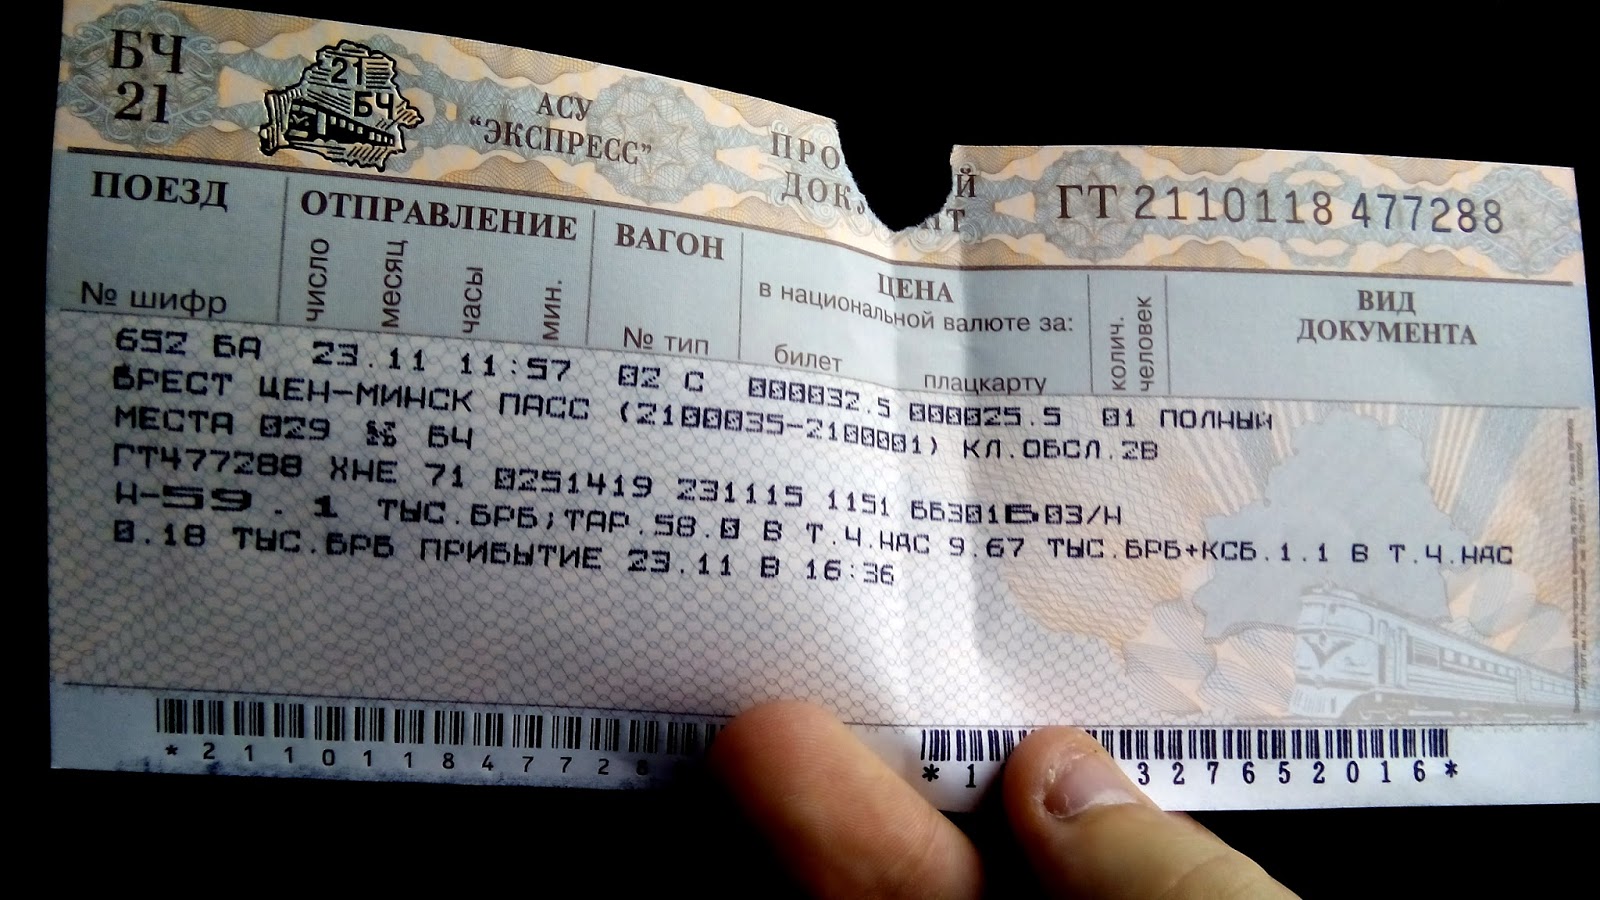 Покупка пригородного билета. АСУ экспресс поезд. Пригородный билет АСУ экспресс. Билет в Минск плацкарт. Вагон шифр.